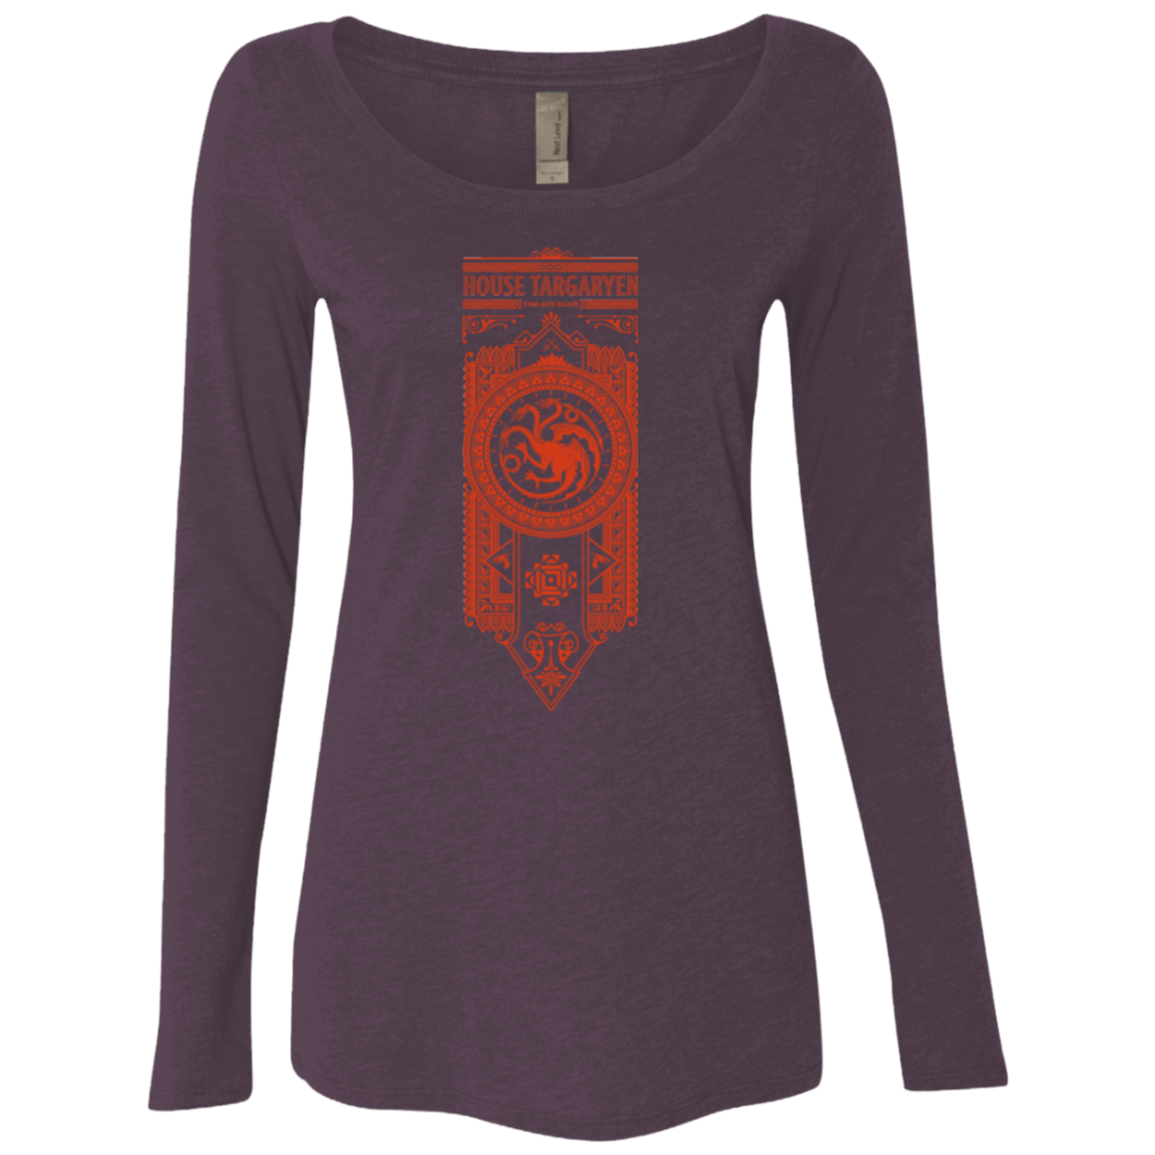 T-Shirts Vintage Purple / Small House Targaryen Women's Triblend Long Sleeve Shirt